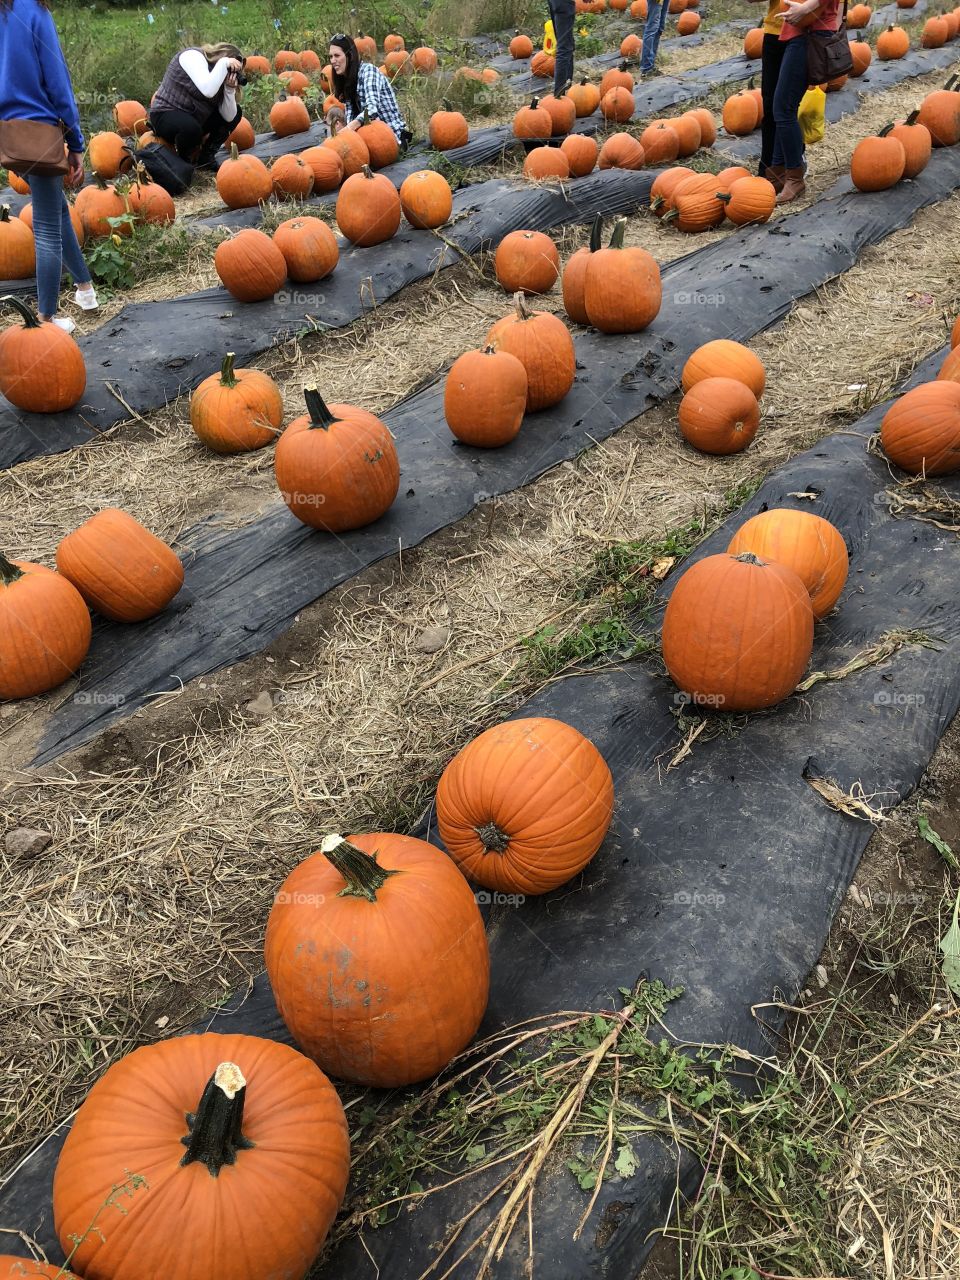 Pumpkins all in a Row